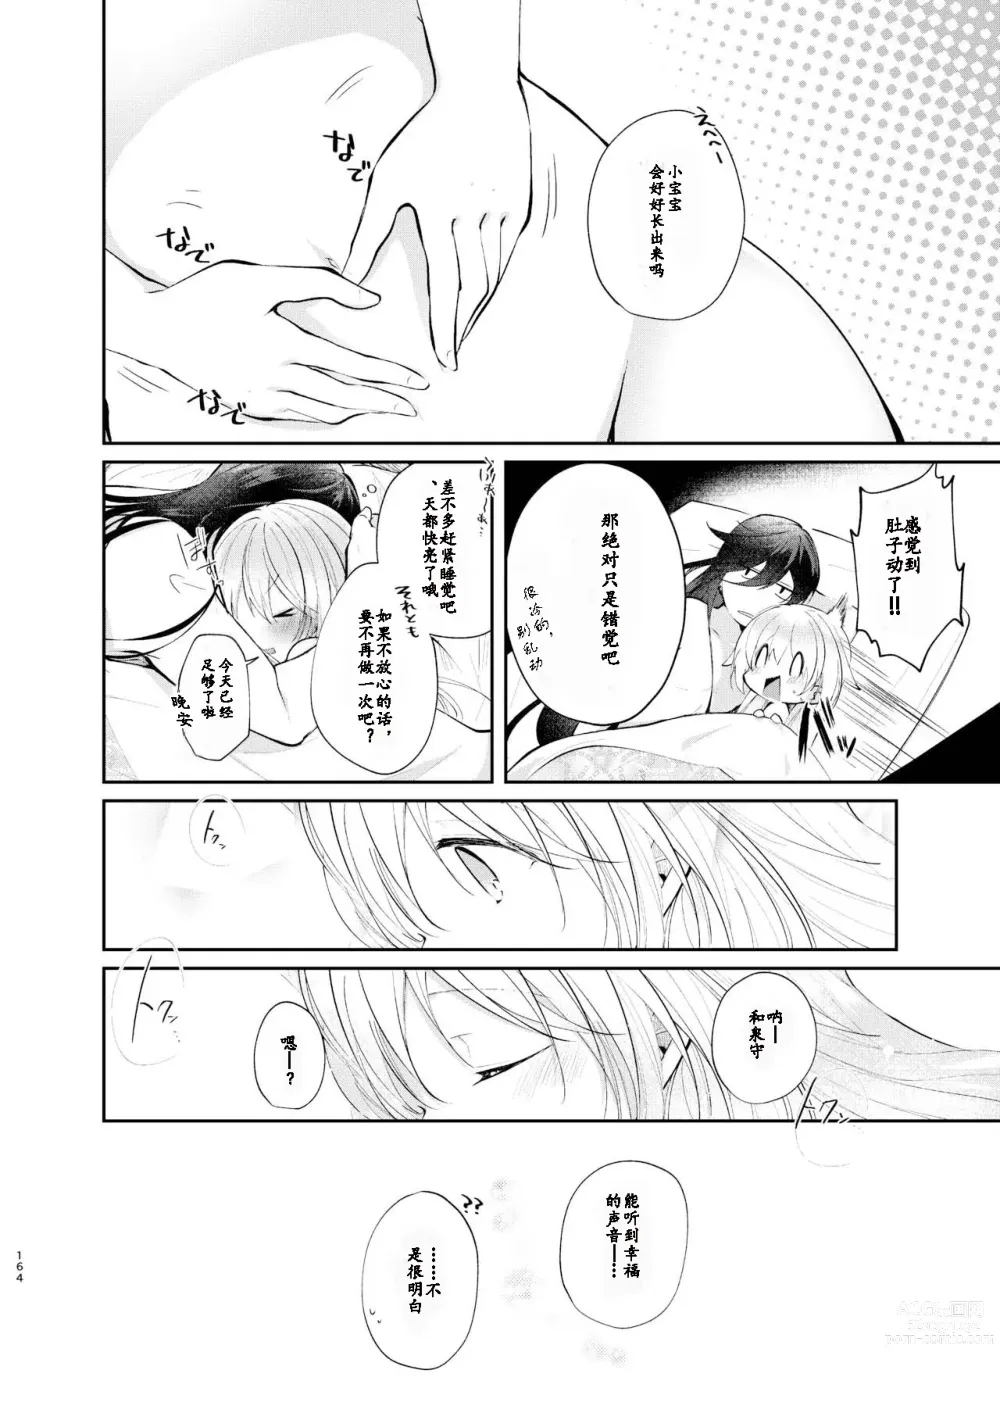 Page 35 of doujinshi 回响夜明